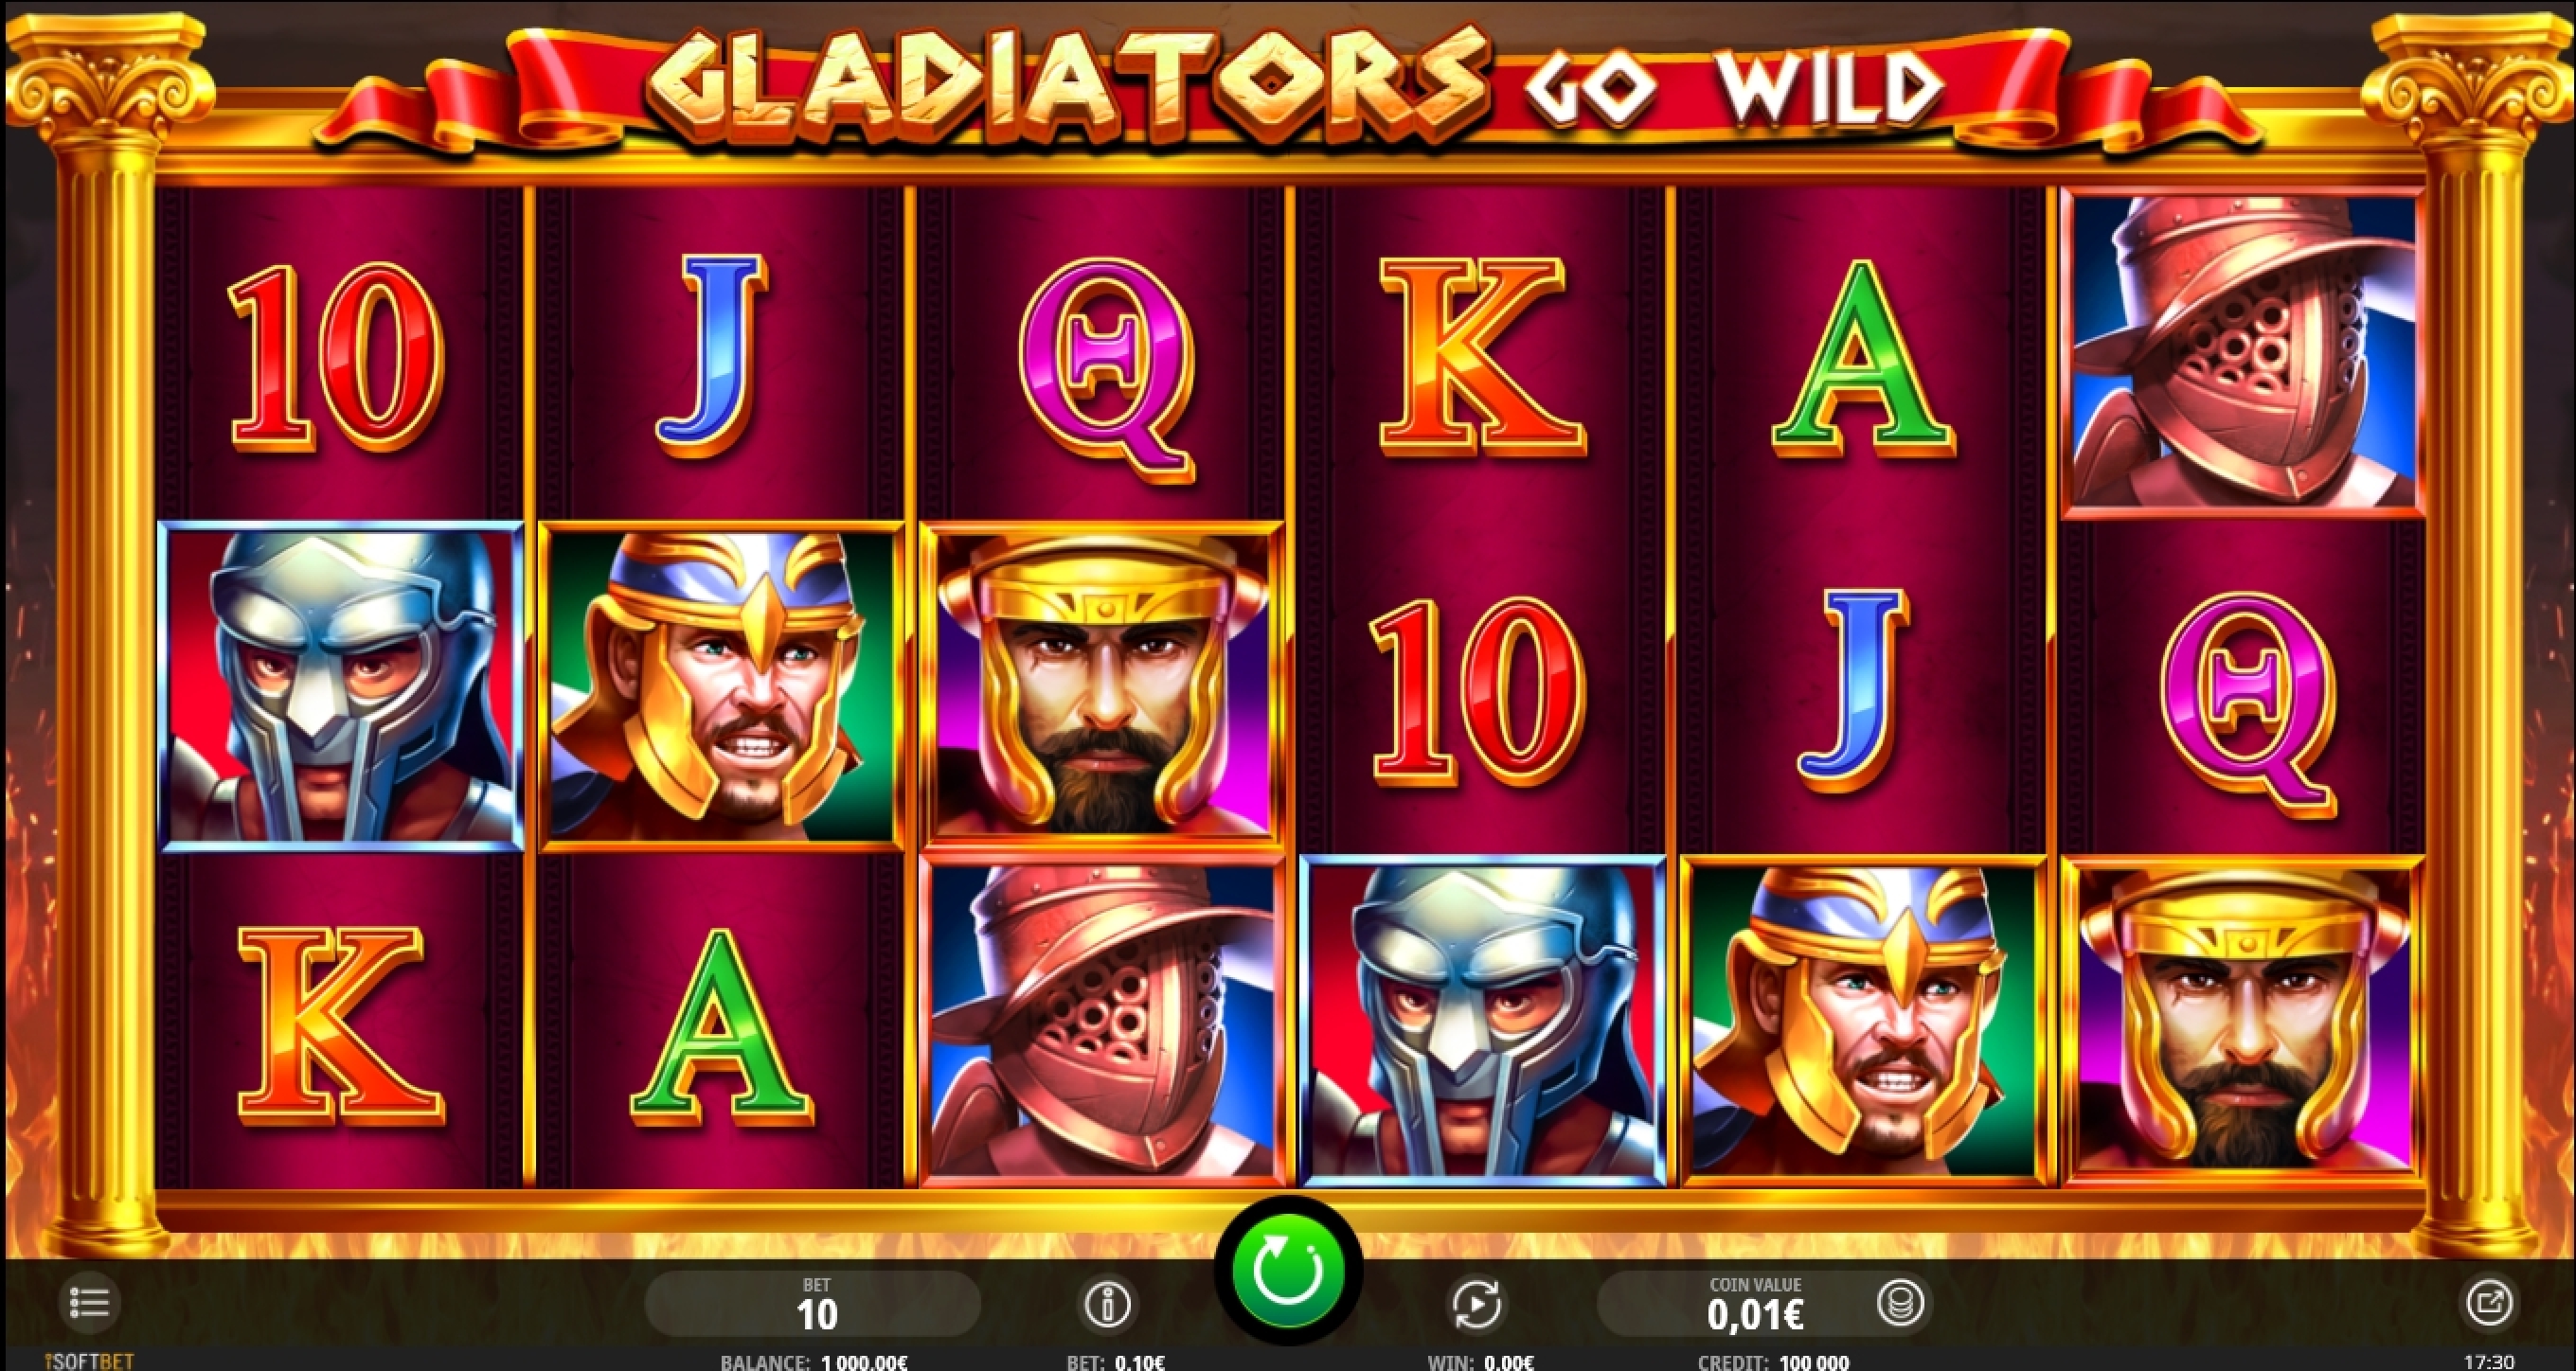 Reels in Gladiators Go Wild Slot Game by iSoftBet